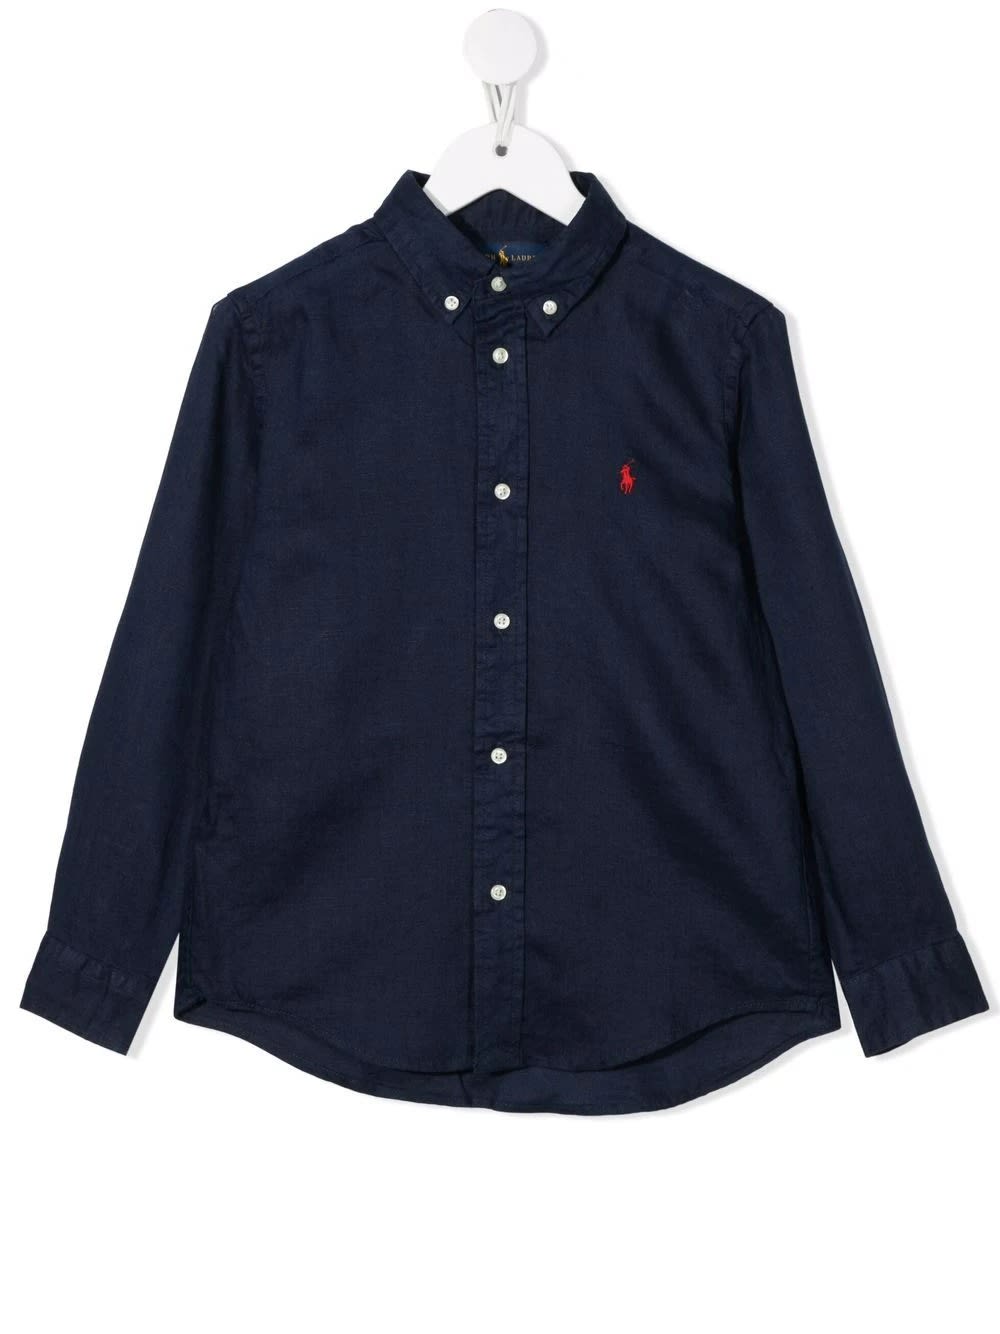 Shop Ralph Lauren Navy Blue Linen Shirt With Embroidered Pony